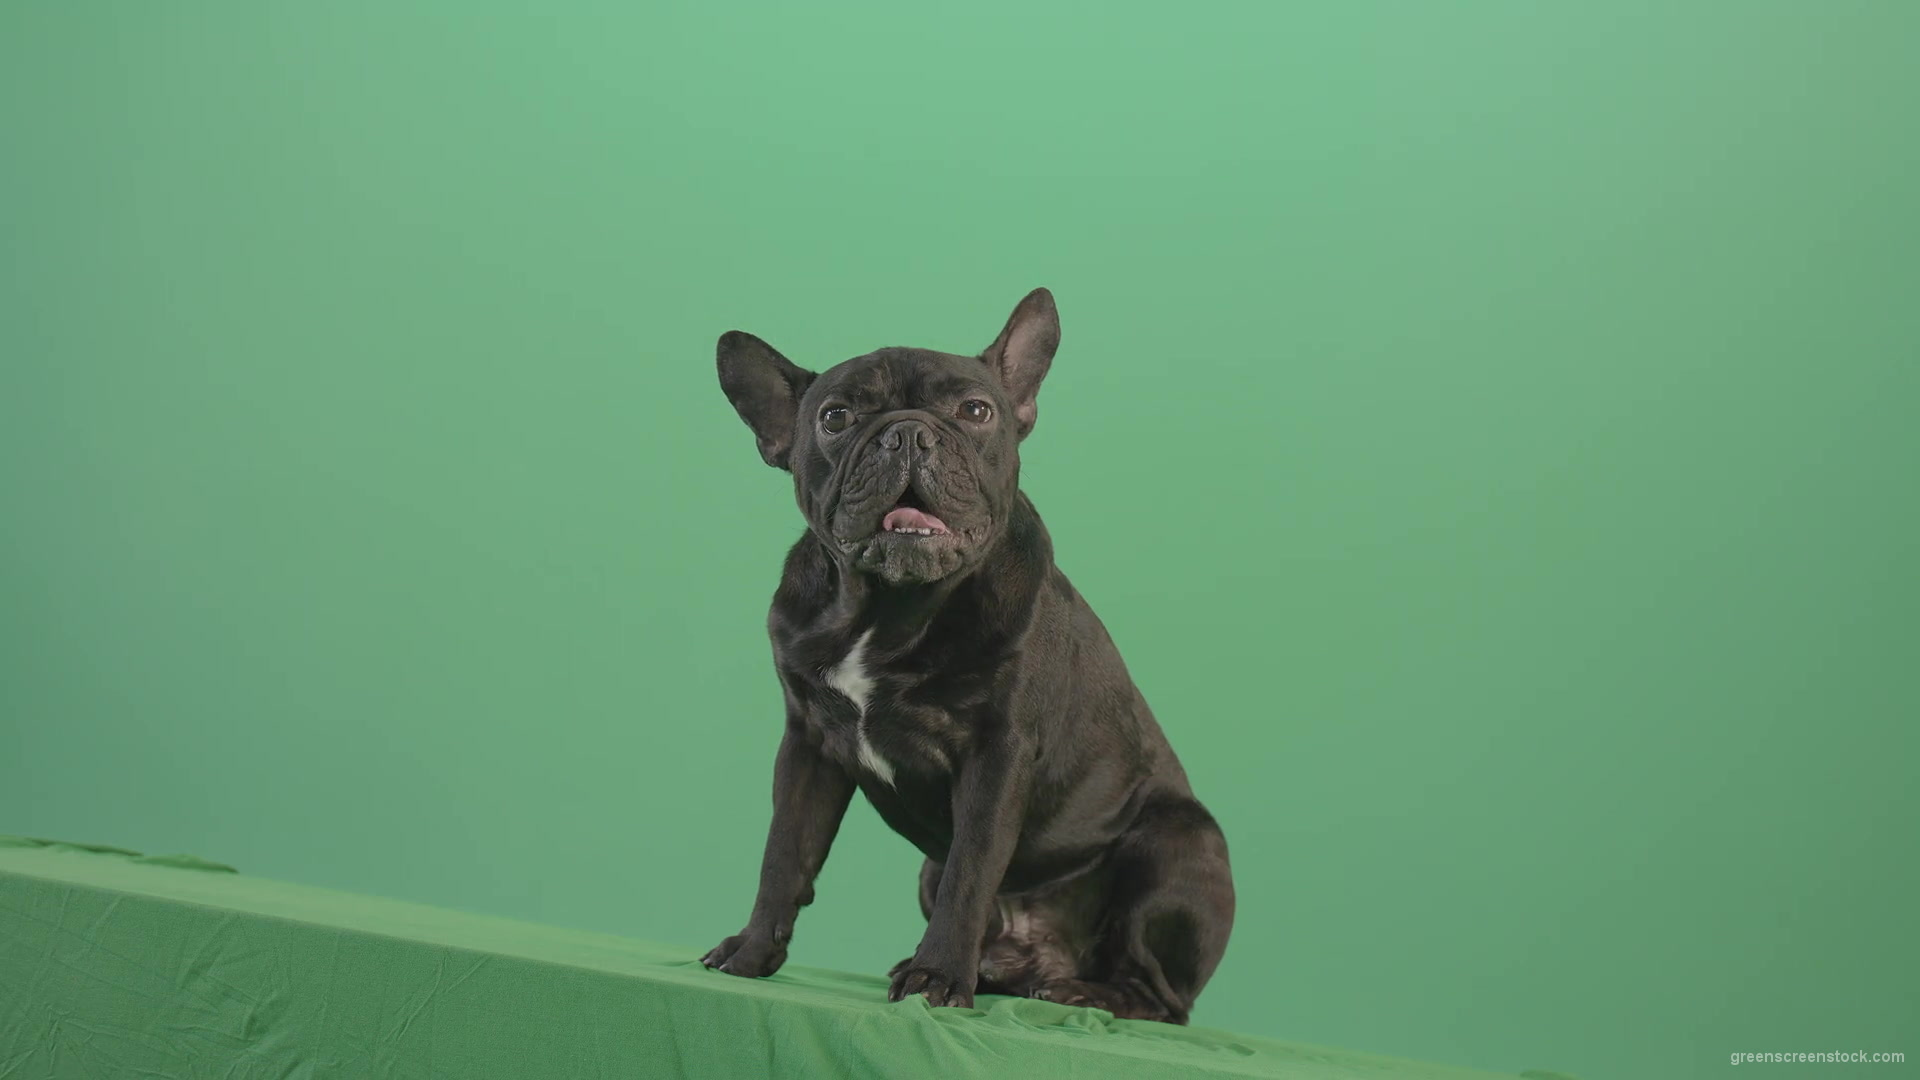 Lazy-french-bulldog-animal-dog-posing-on-green-screen-4K-Video-Footage-1920_006 Green Screen Stock